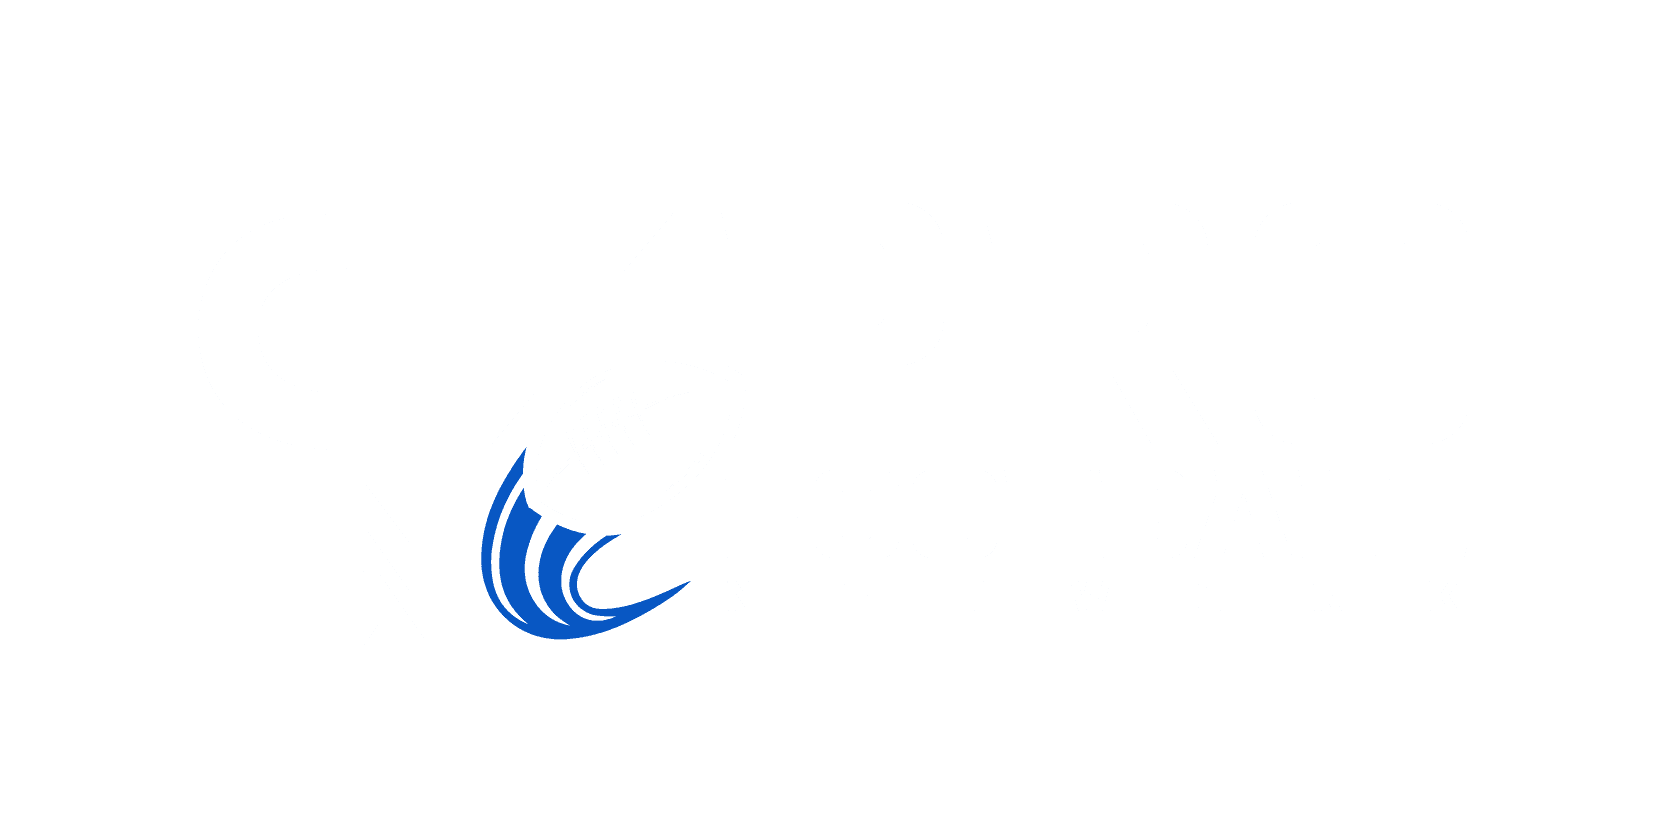 Pro Football Network logo